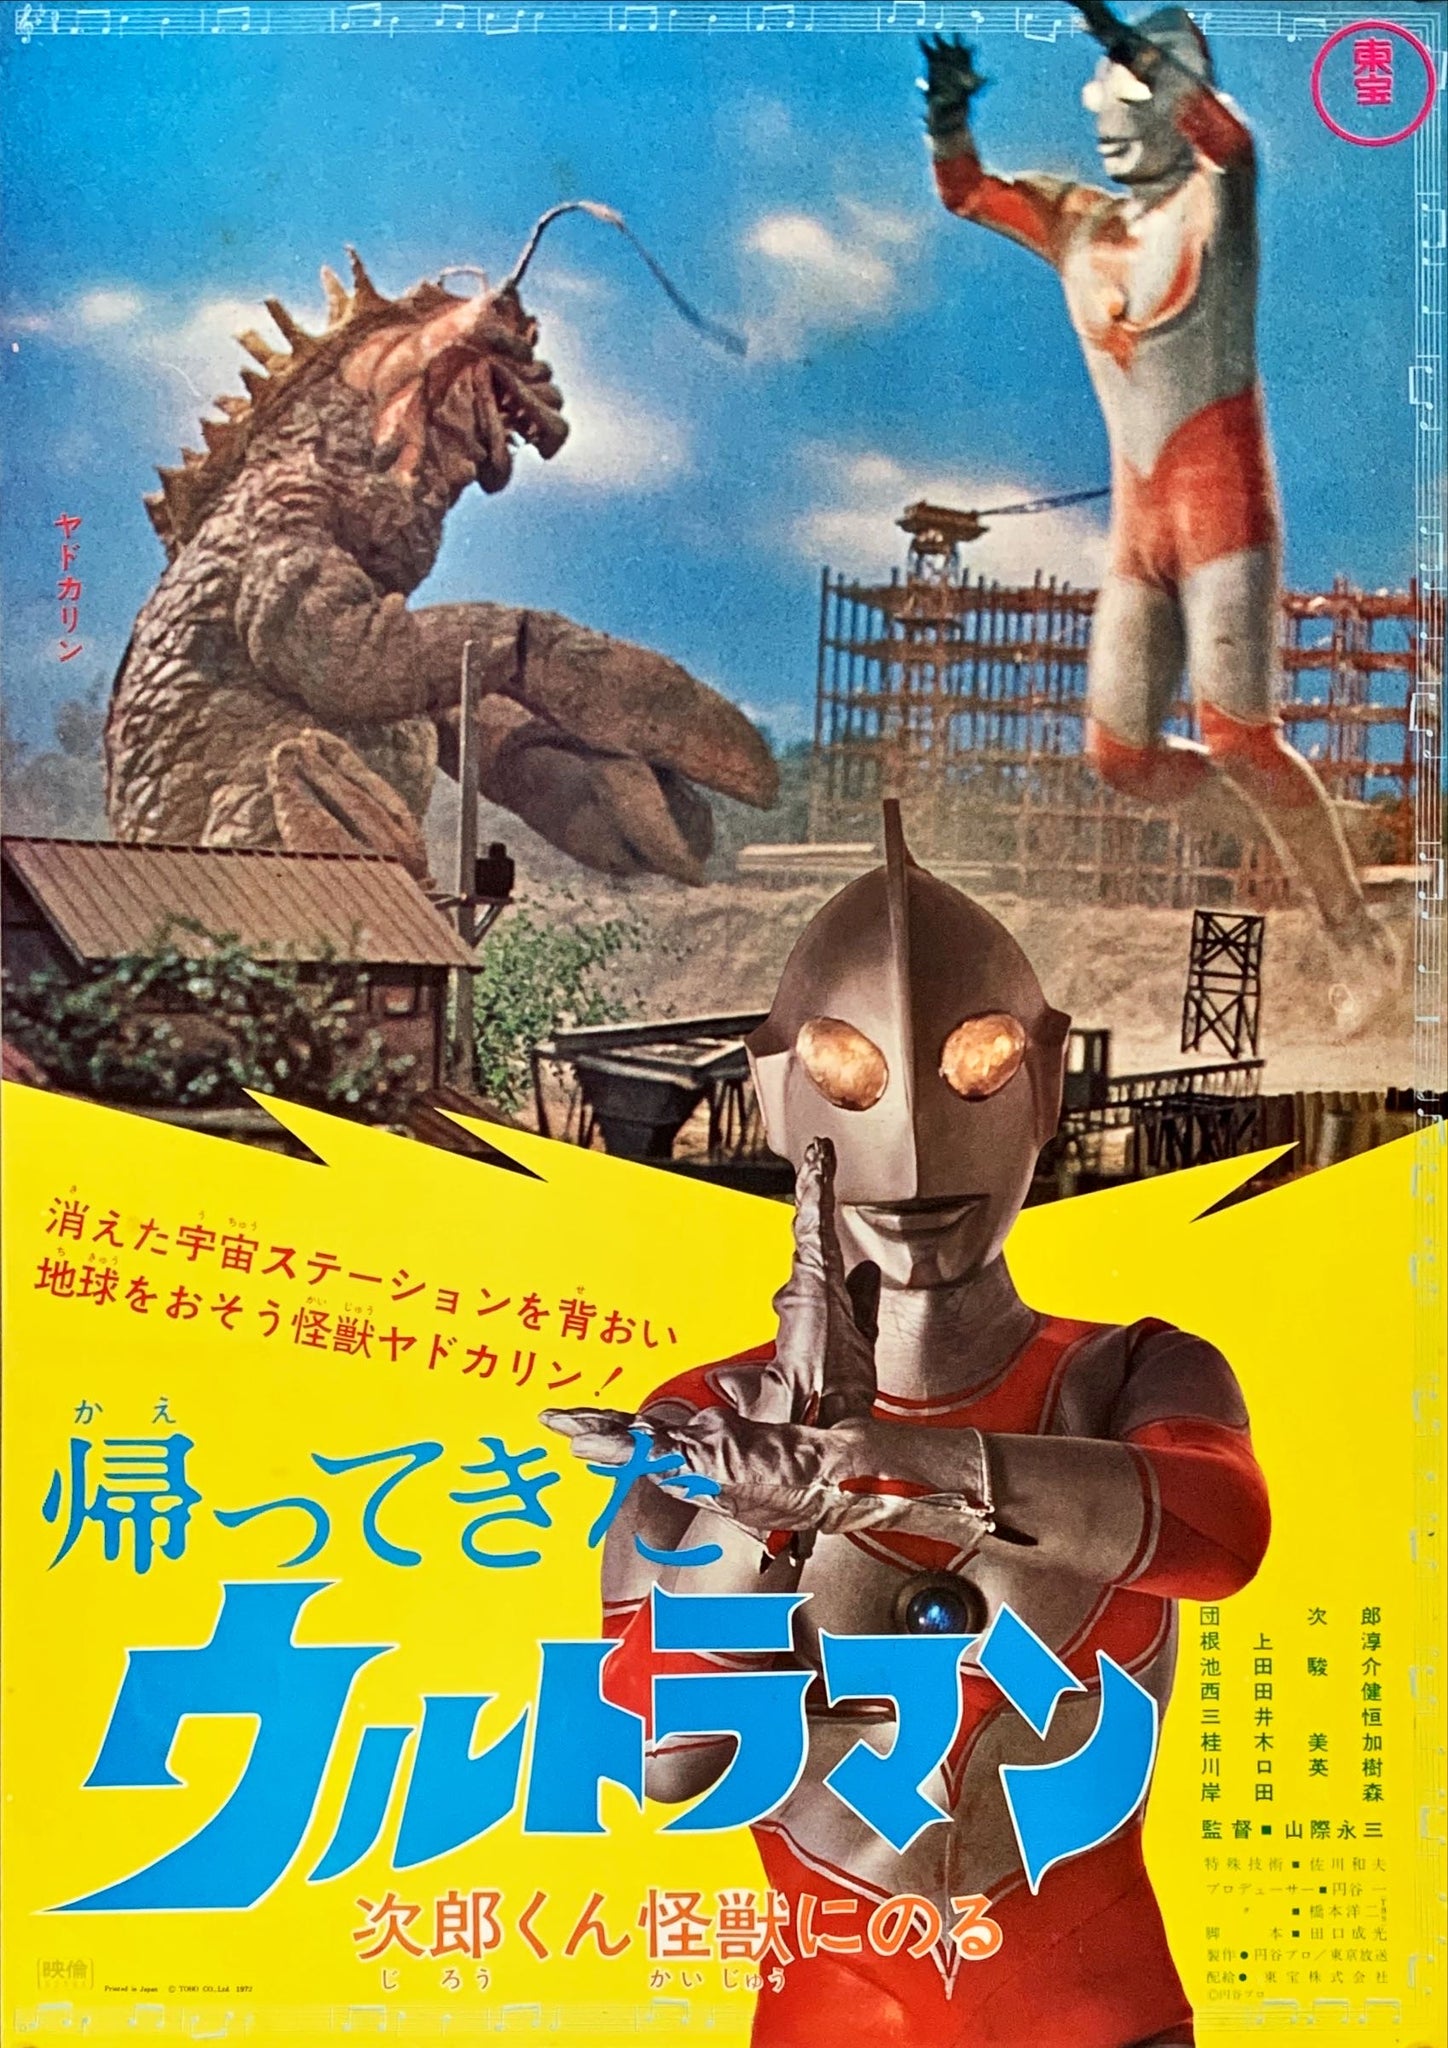 □GENEON ウルトラマン(1966)ウルトラセブン(1967)帰ってきたウルトラマン(1971)ウルトラマンA(1972)DVDセット 同梱  1円~【レトロ】 - DVD